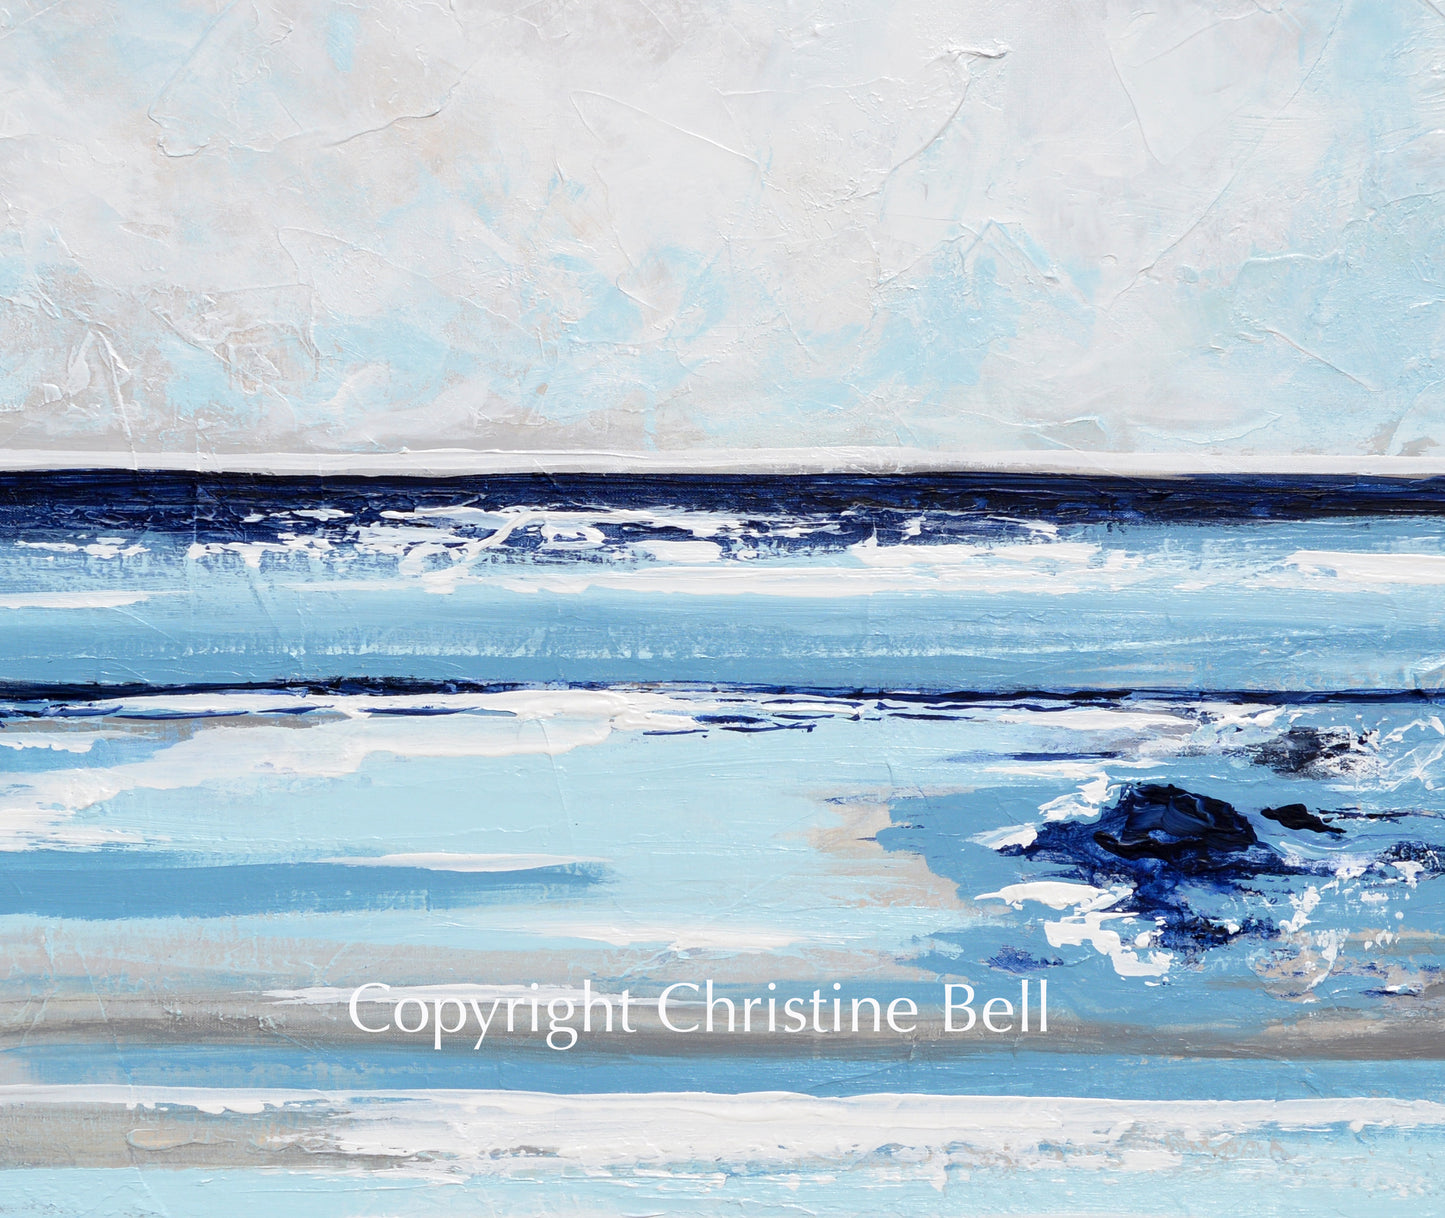 "Exhale" ORIGINAL Art Textured Abstract Painting Navy Light Blue White Beige Grey Coastal Seascape Wall Art XL 48x48"